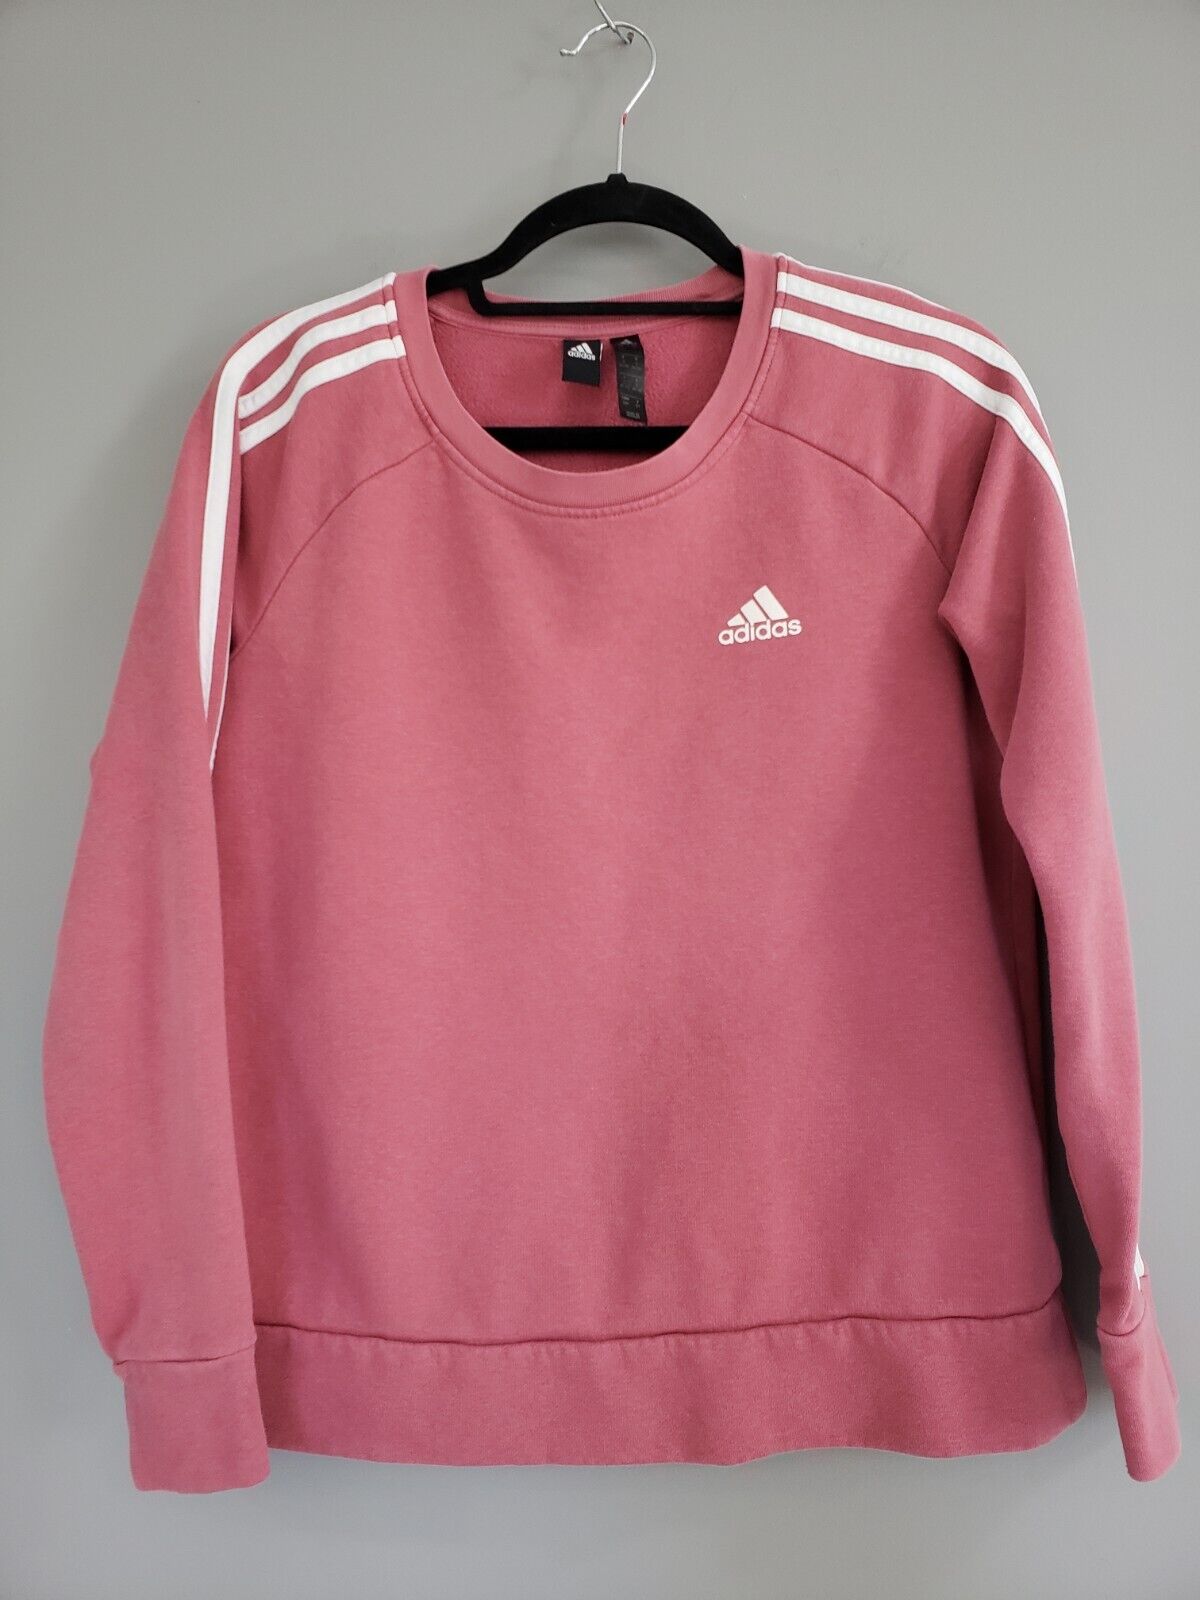 Adidas Womens Three Stripe Crewneck Sweatshirt Mauve Pink Small Gym Yoga Running